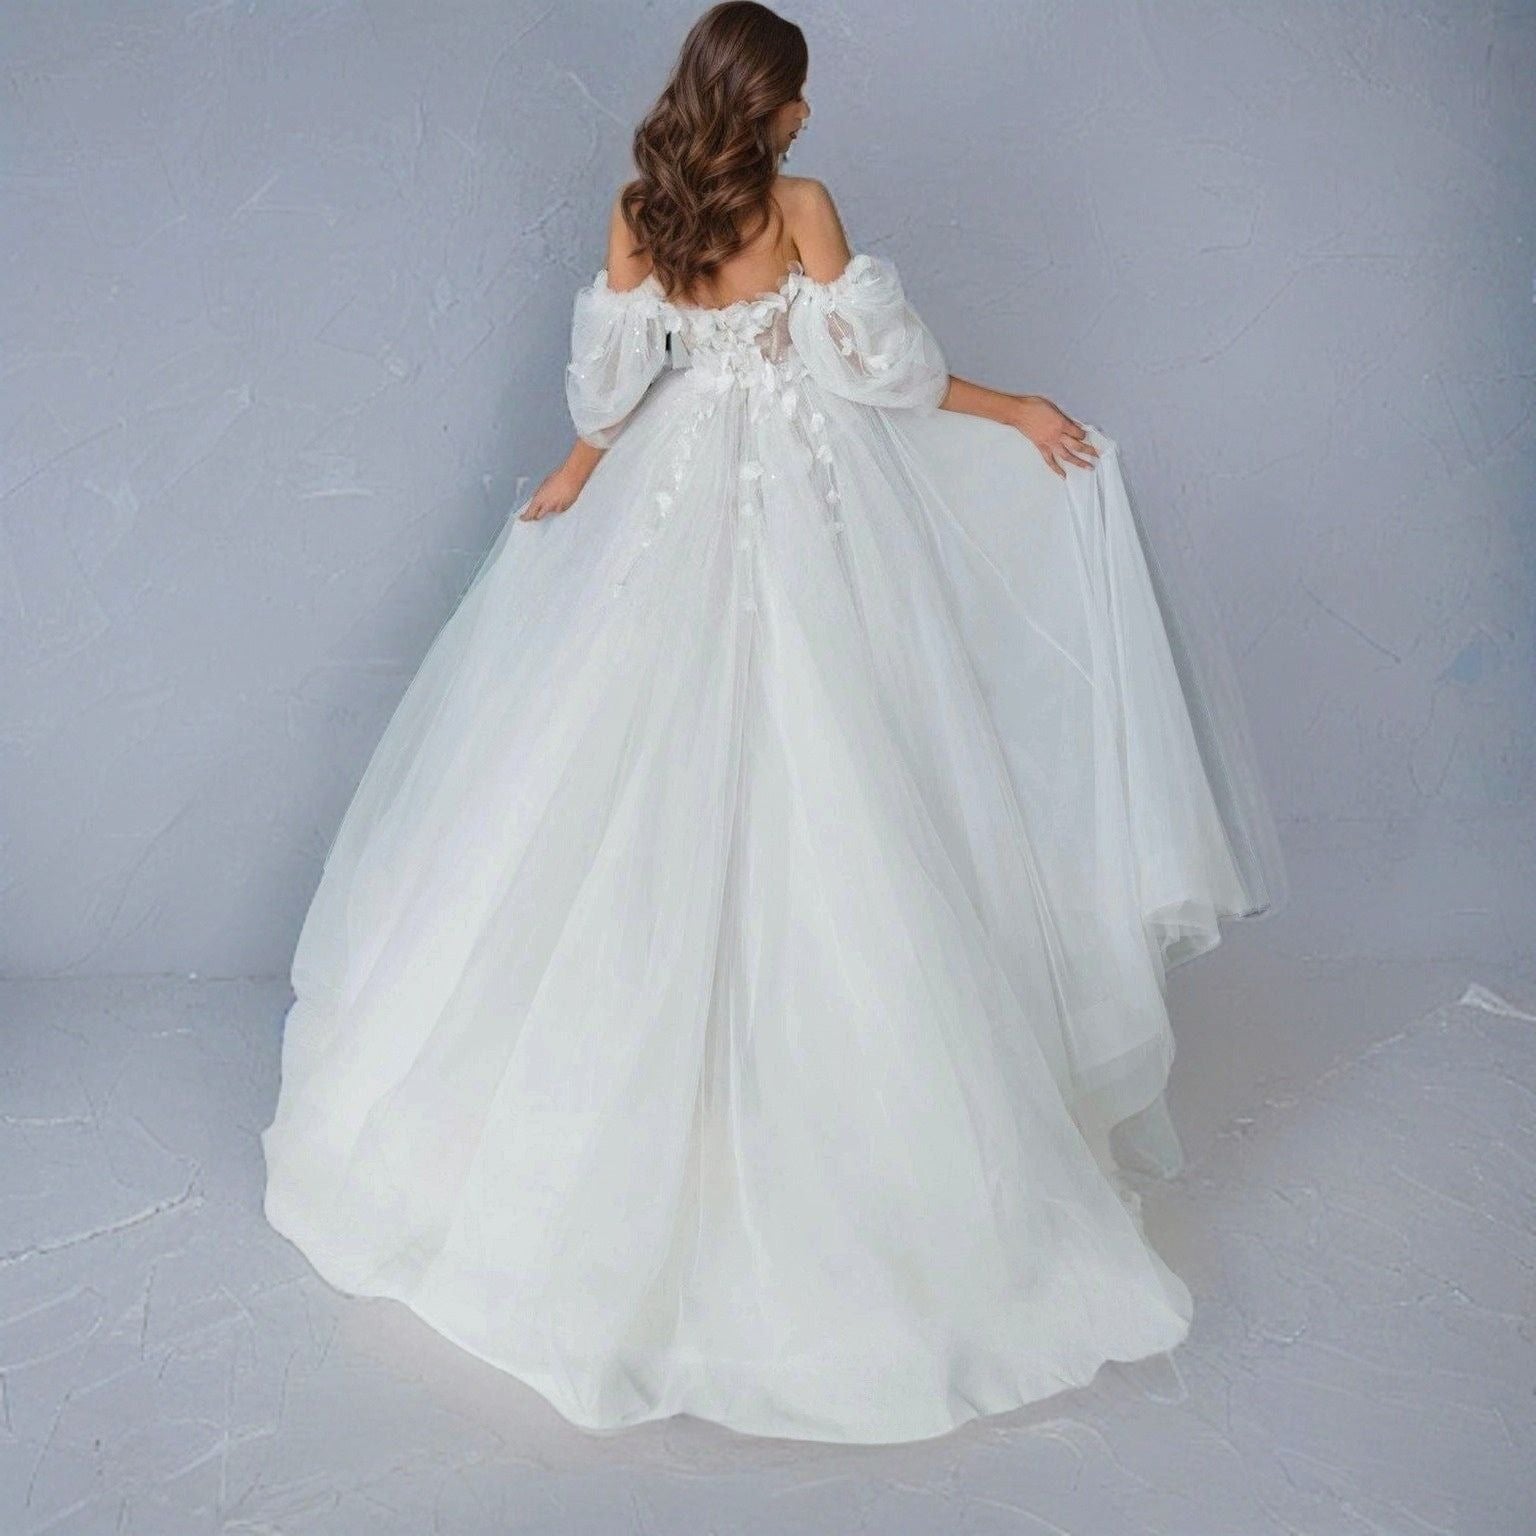 Ender Legard Custom Made Sample Wedding Dress Save 81% - Stillwhite